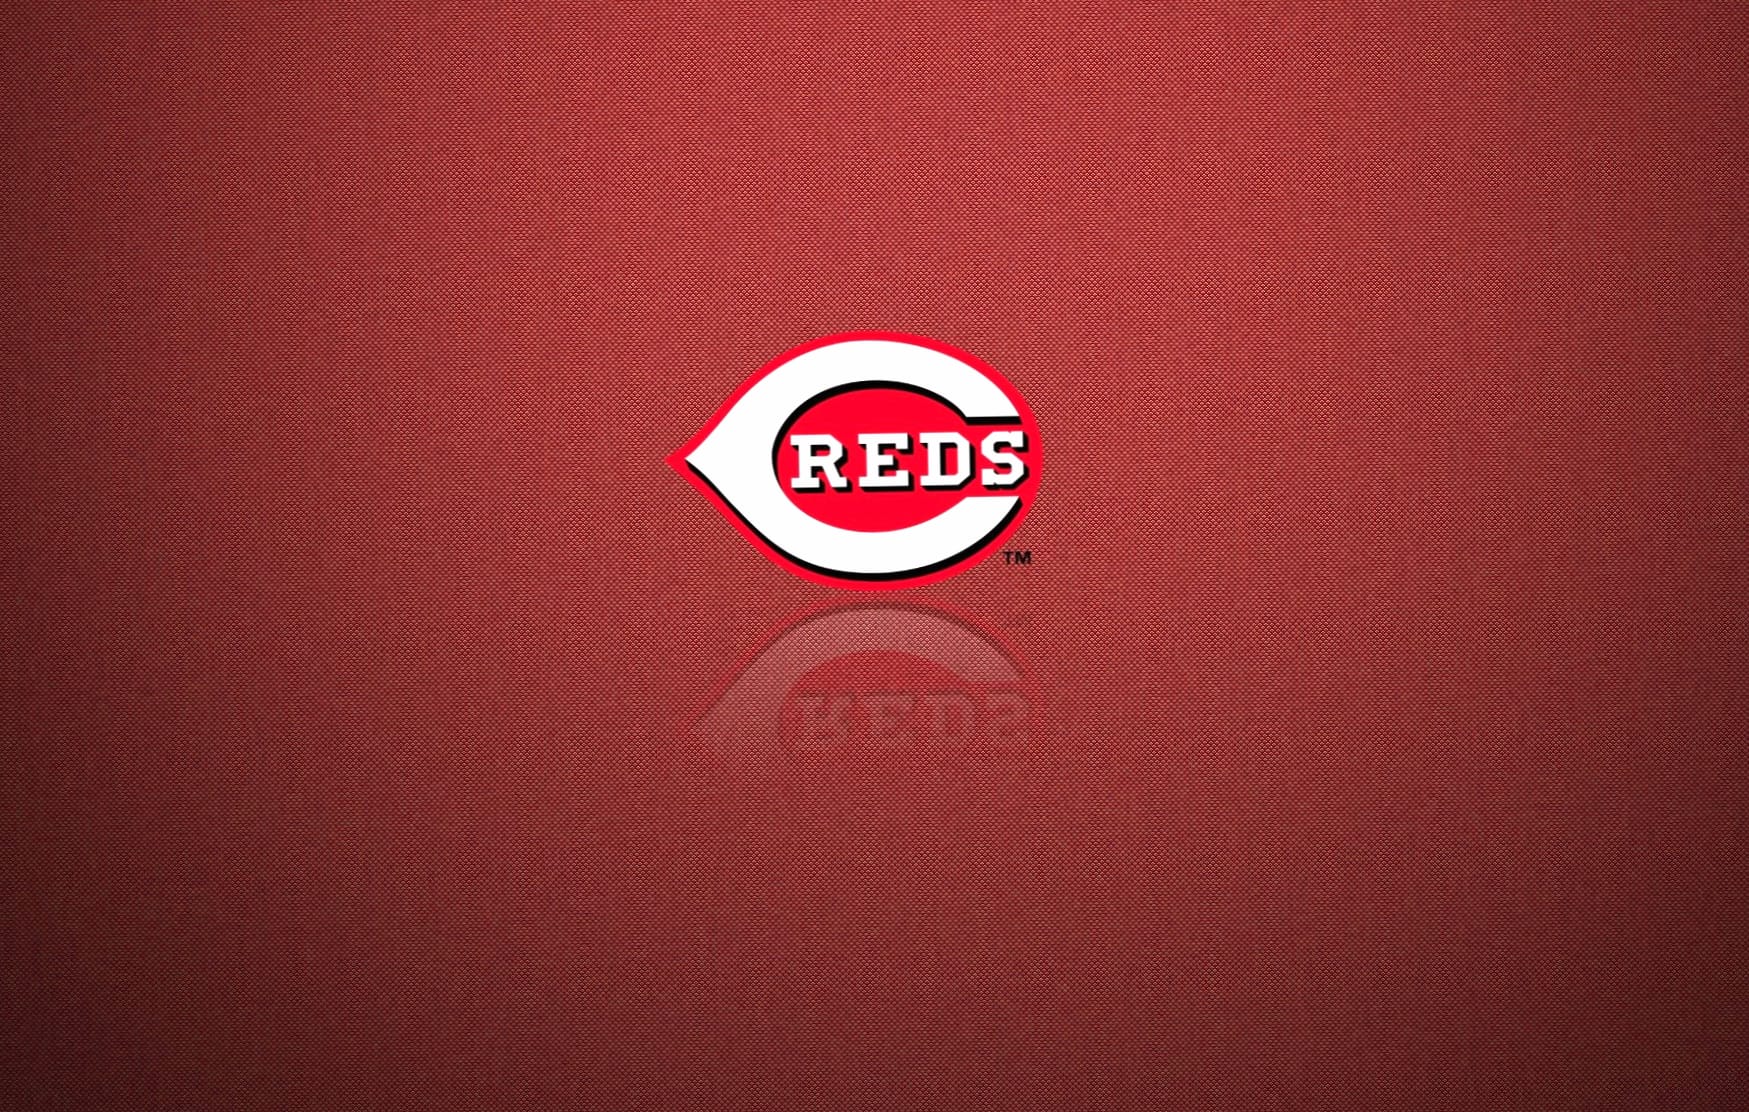 Cincinnati Reds at 2048 x 2048 iPad size wallpapers HD quality